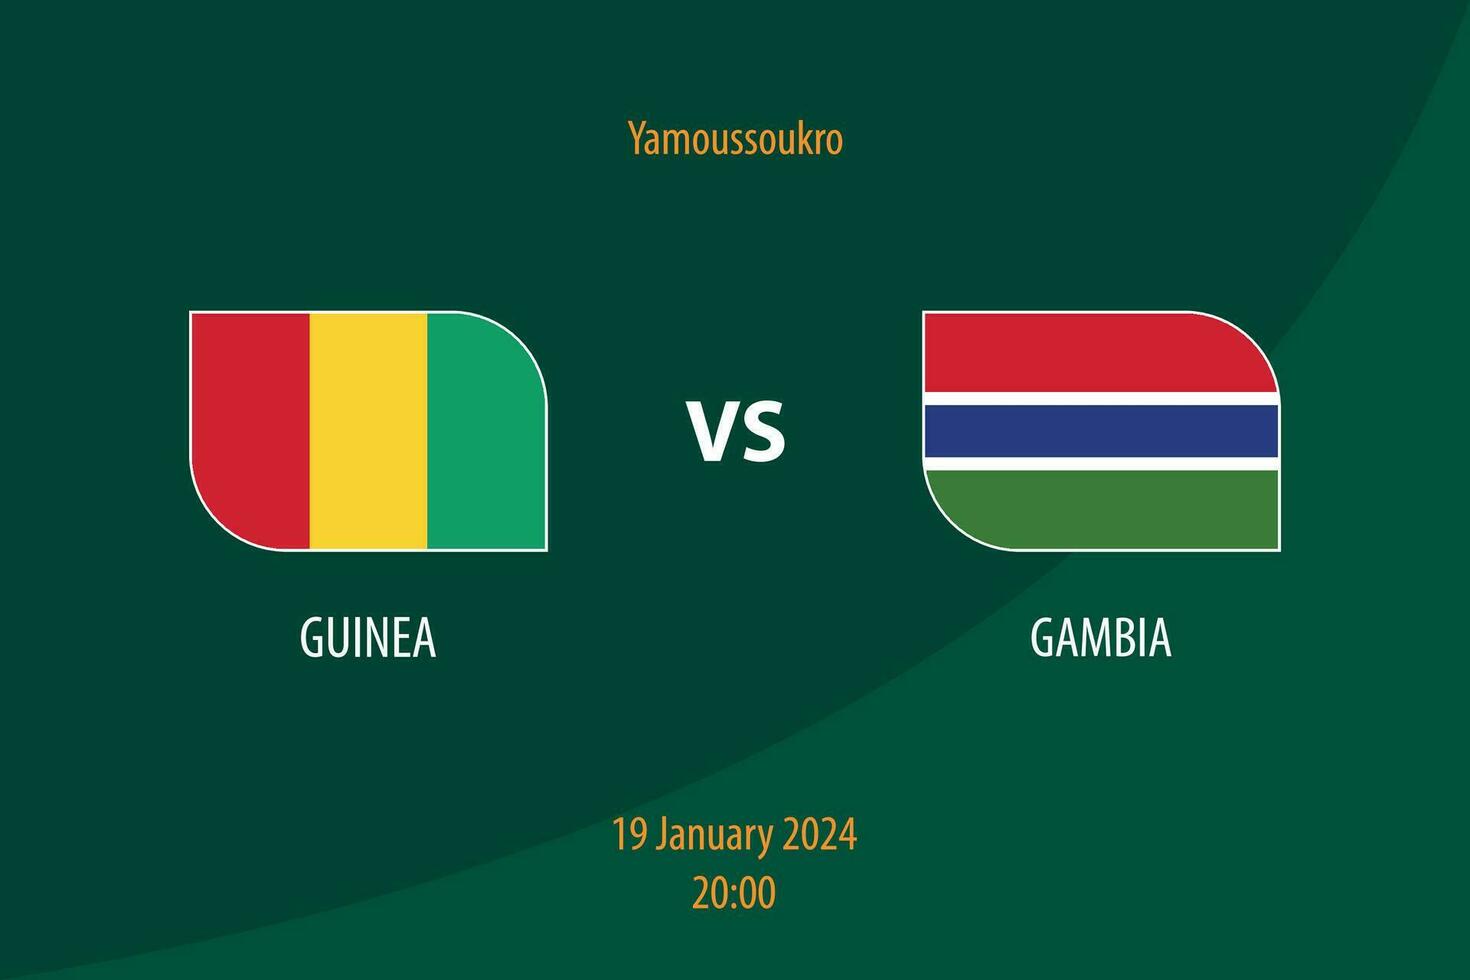 Guinea vs Gambia football scoreboard broadcast template vector